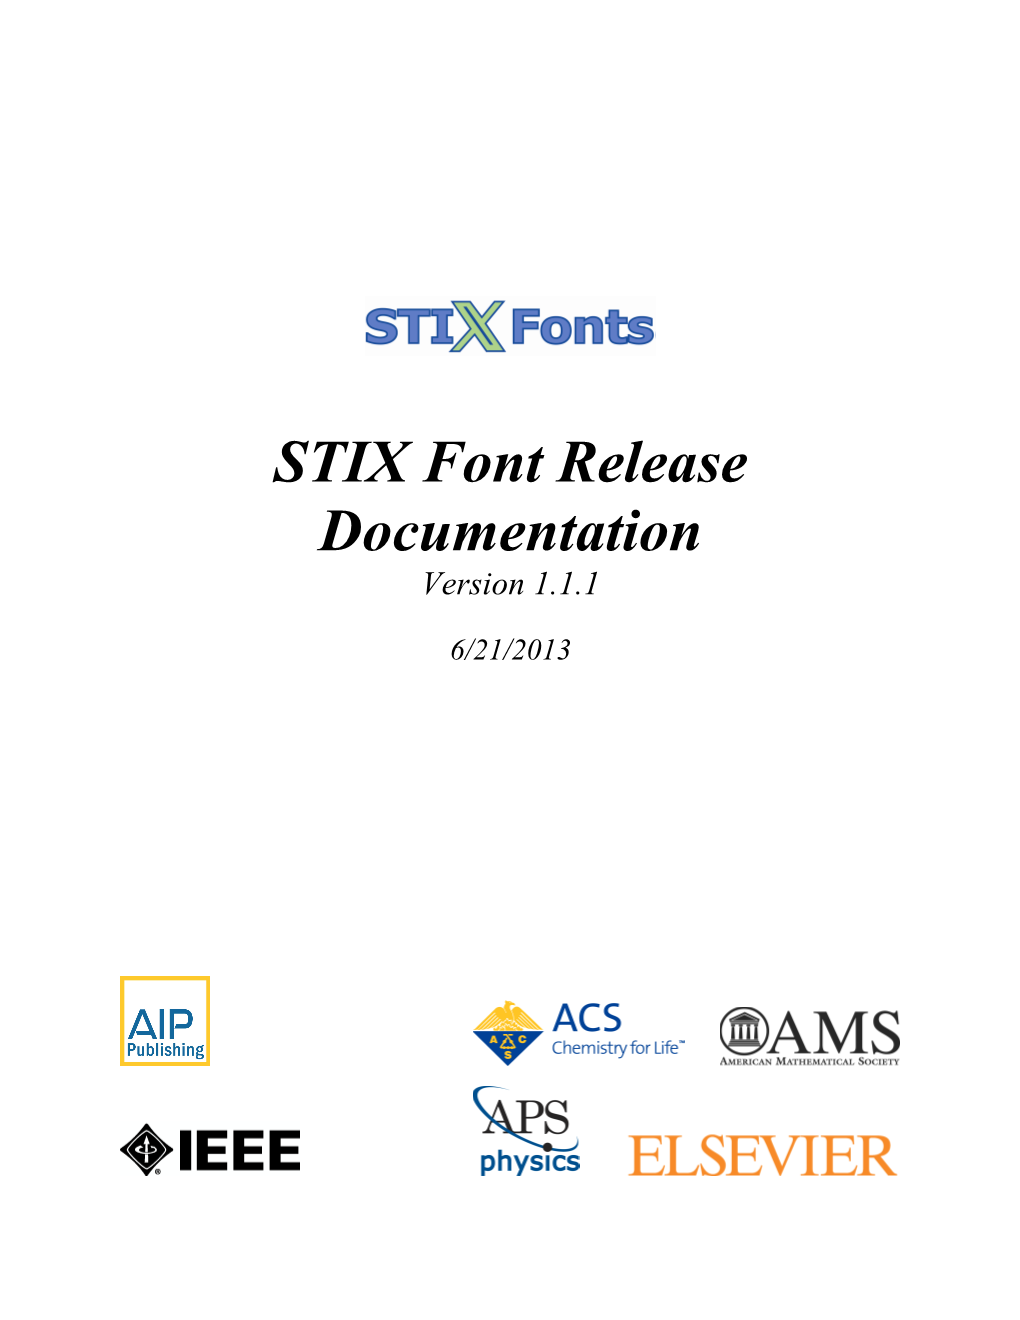 STIX Font 1.1.1 Release Documentation